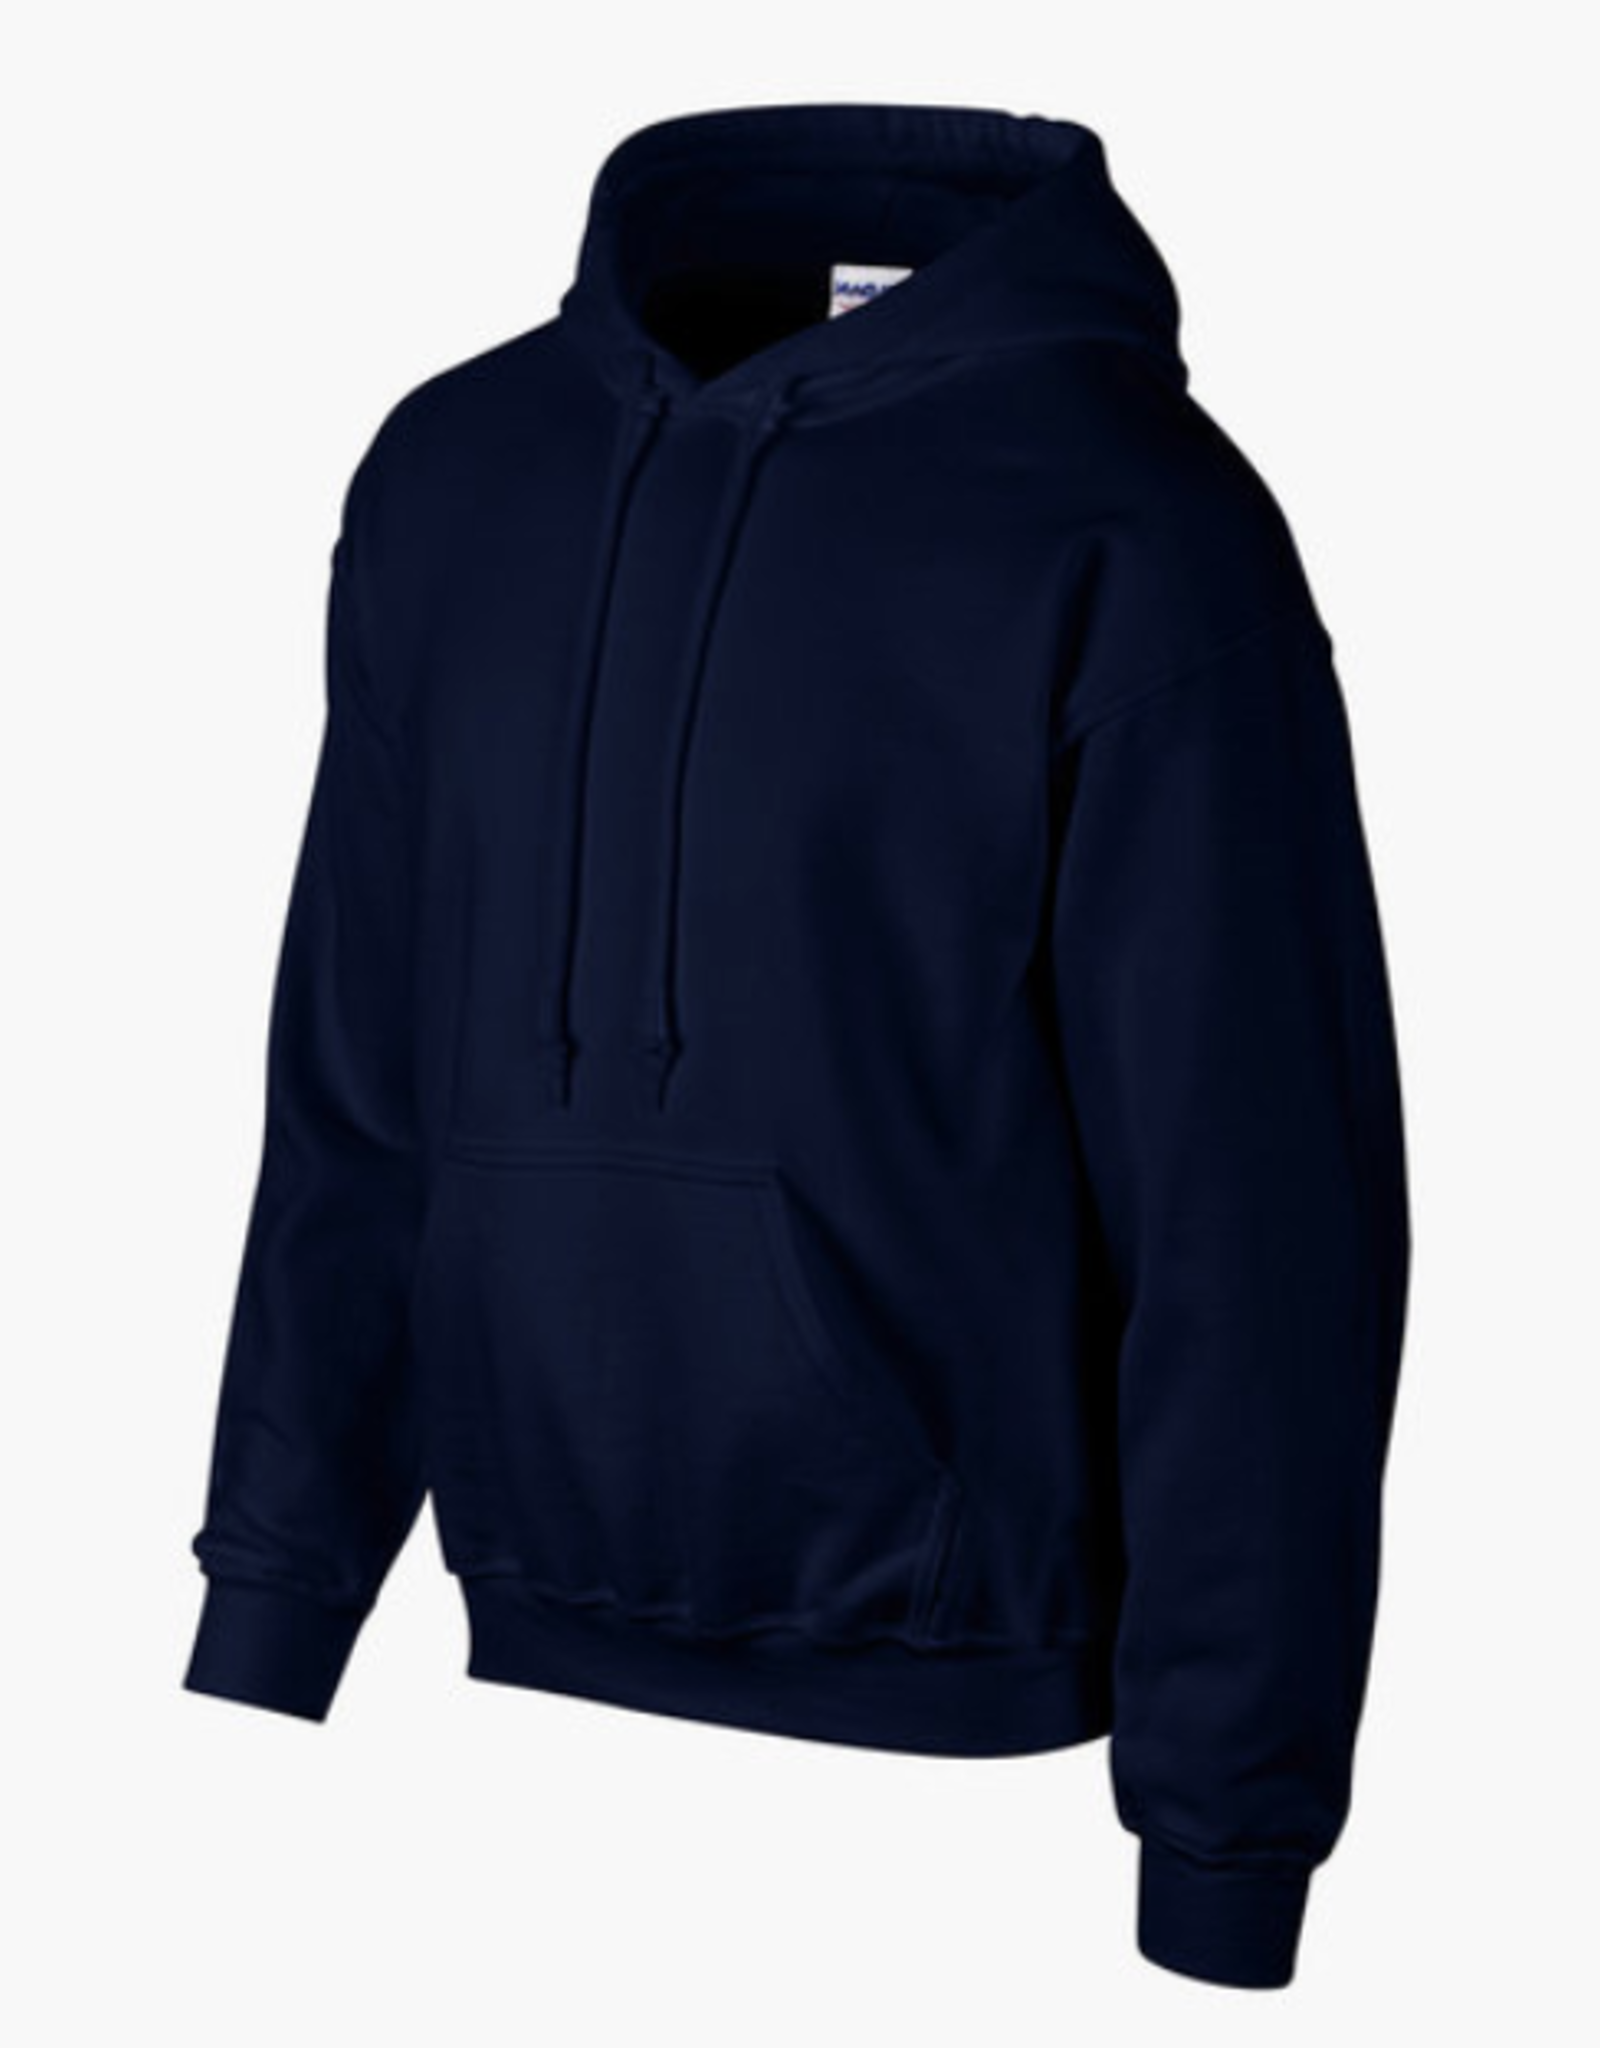 NON-UNIFORM Custom Sweatshirt, Custom Options, hoodie